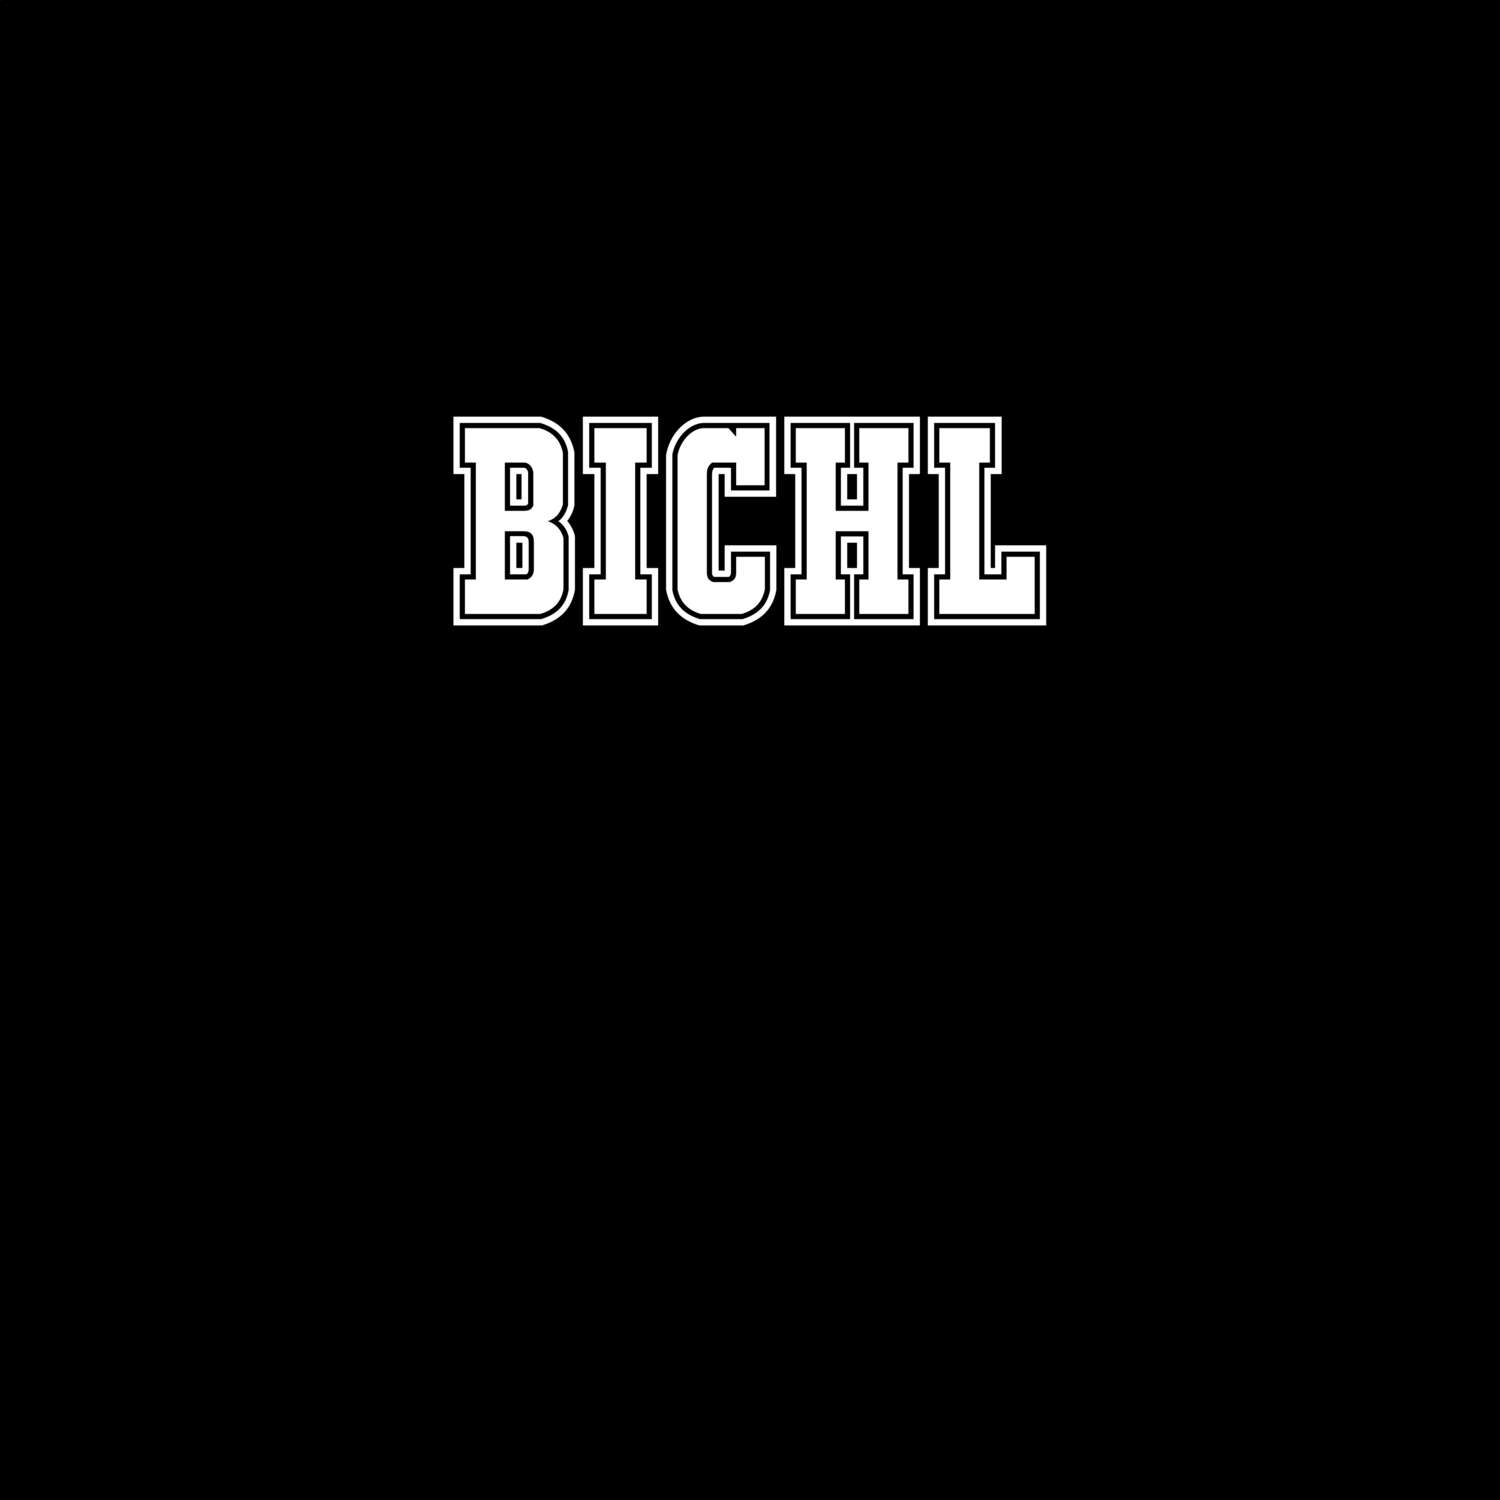 Bichl T-Shirt »Classic«